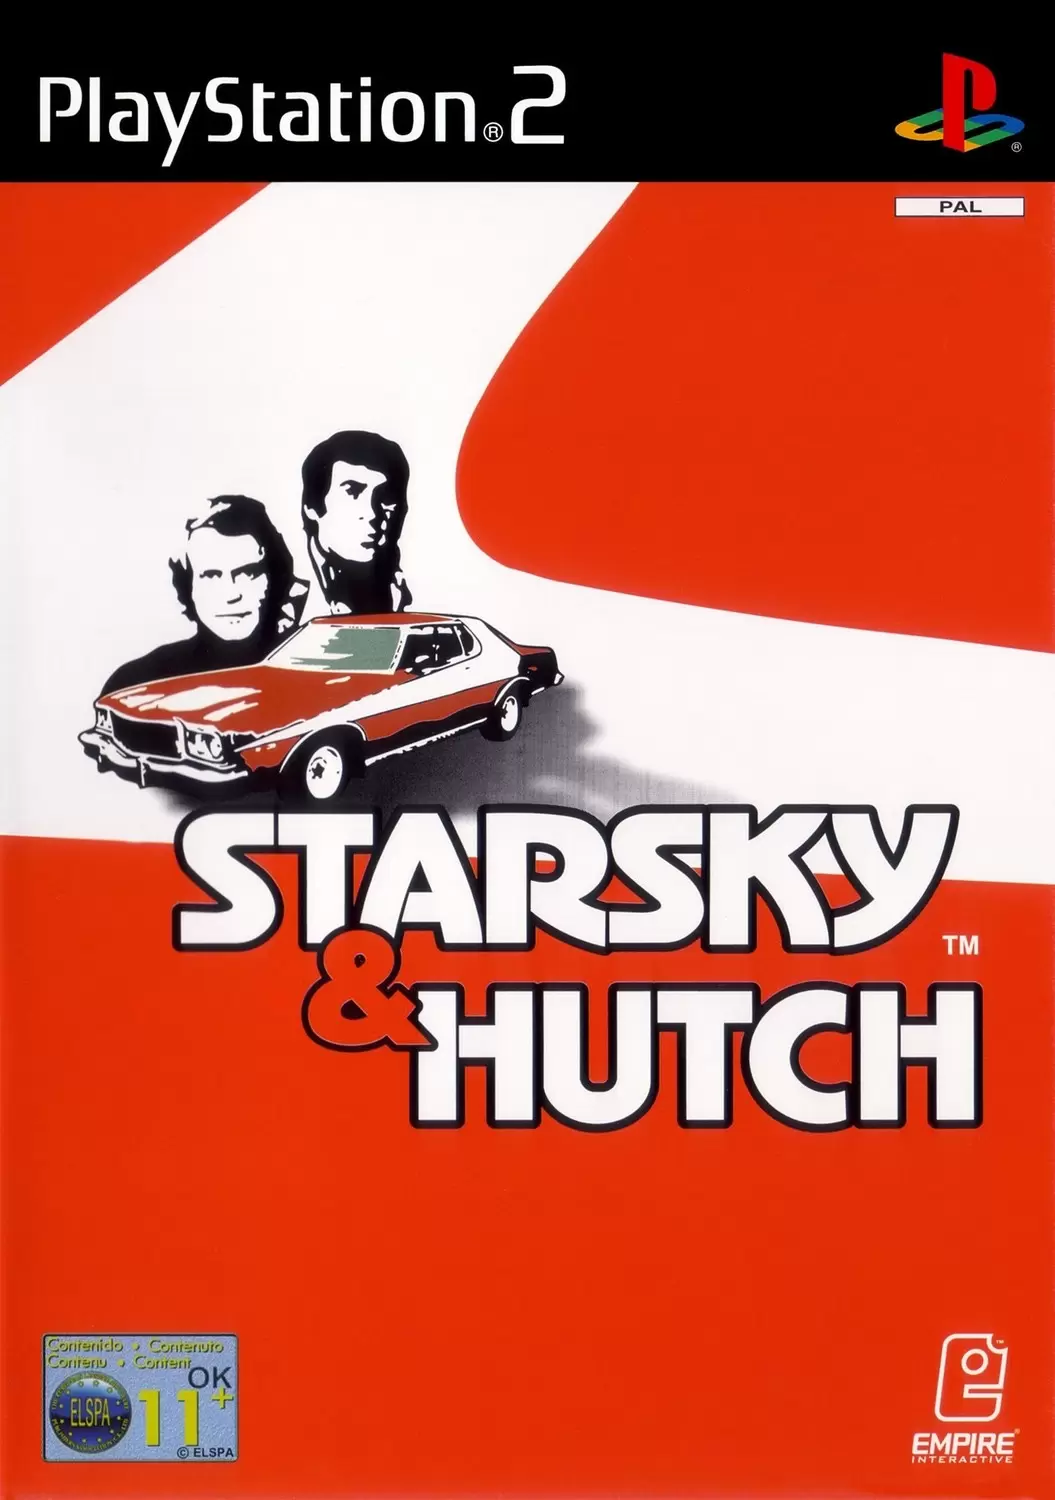 PS2 Games - Starsky & Hutch